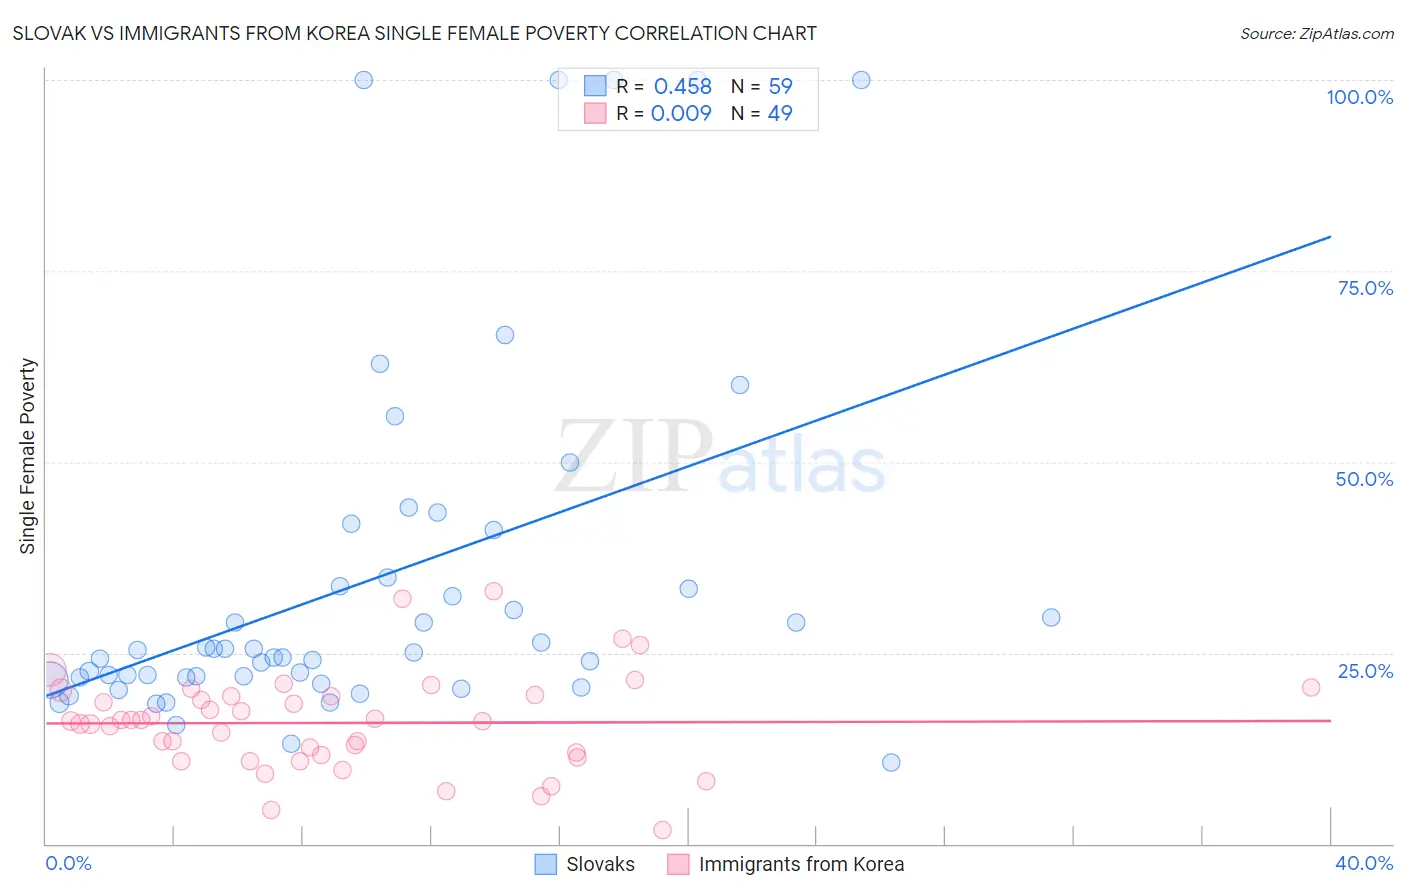 Slovak vs Immigrants from Korea Single Female Poverty